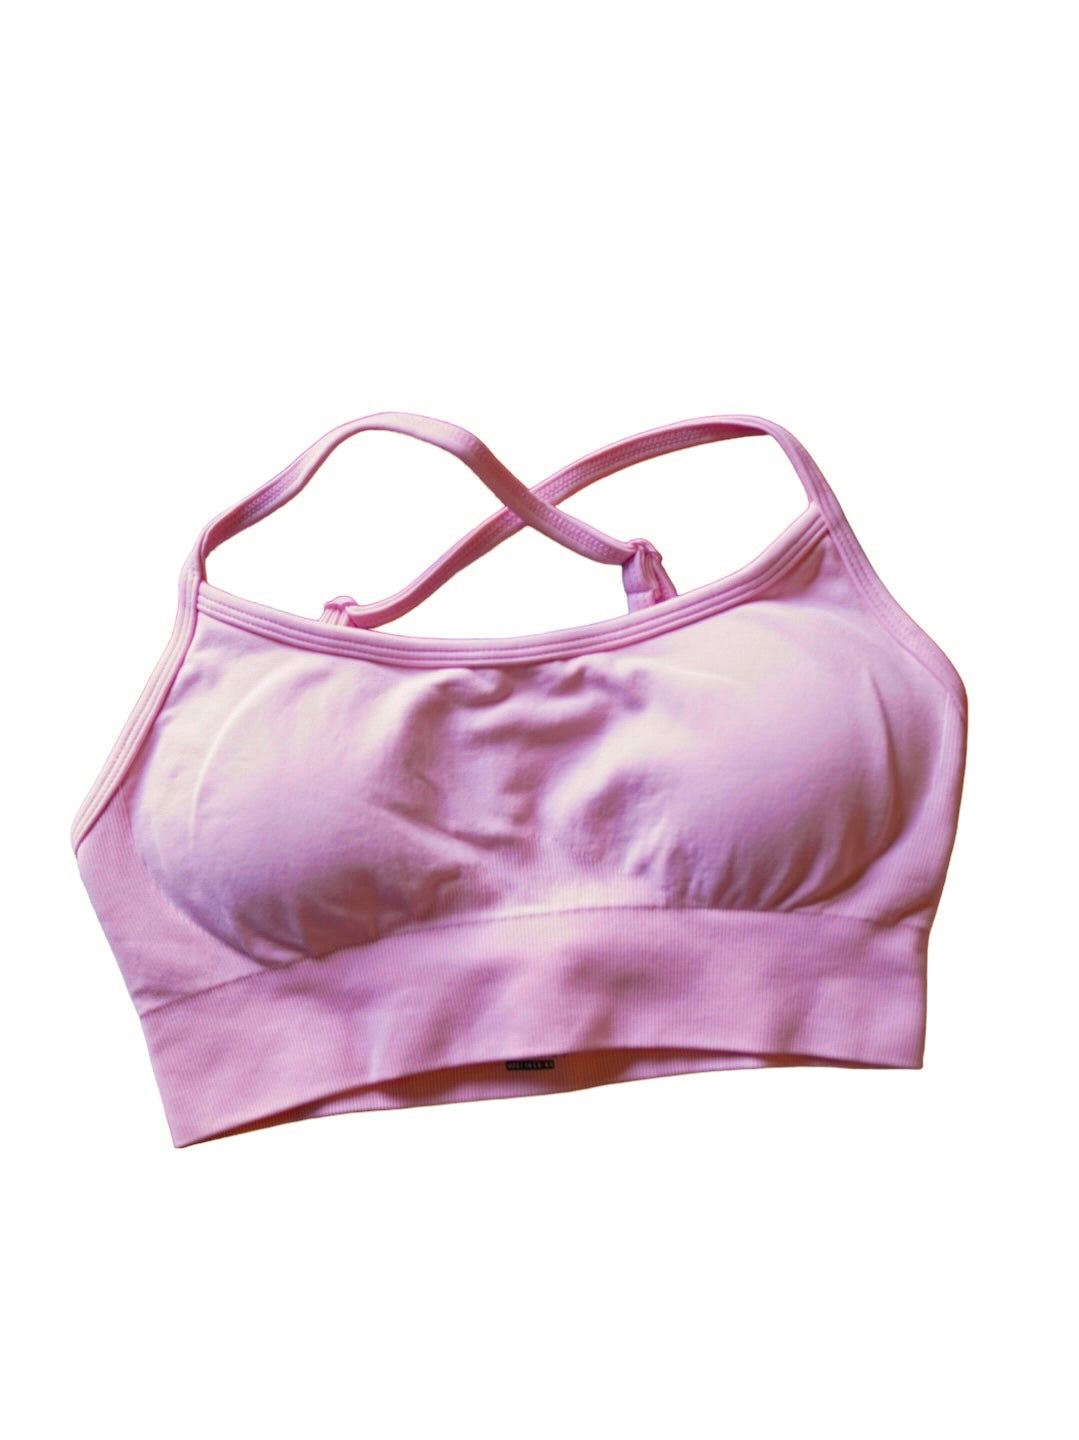 Light pink sports bra